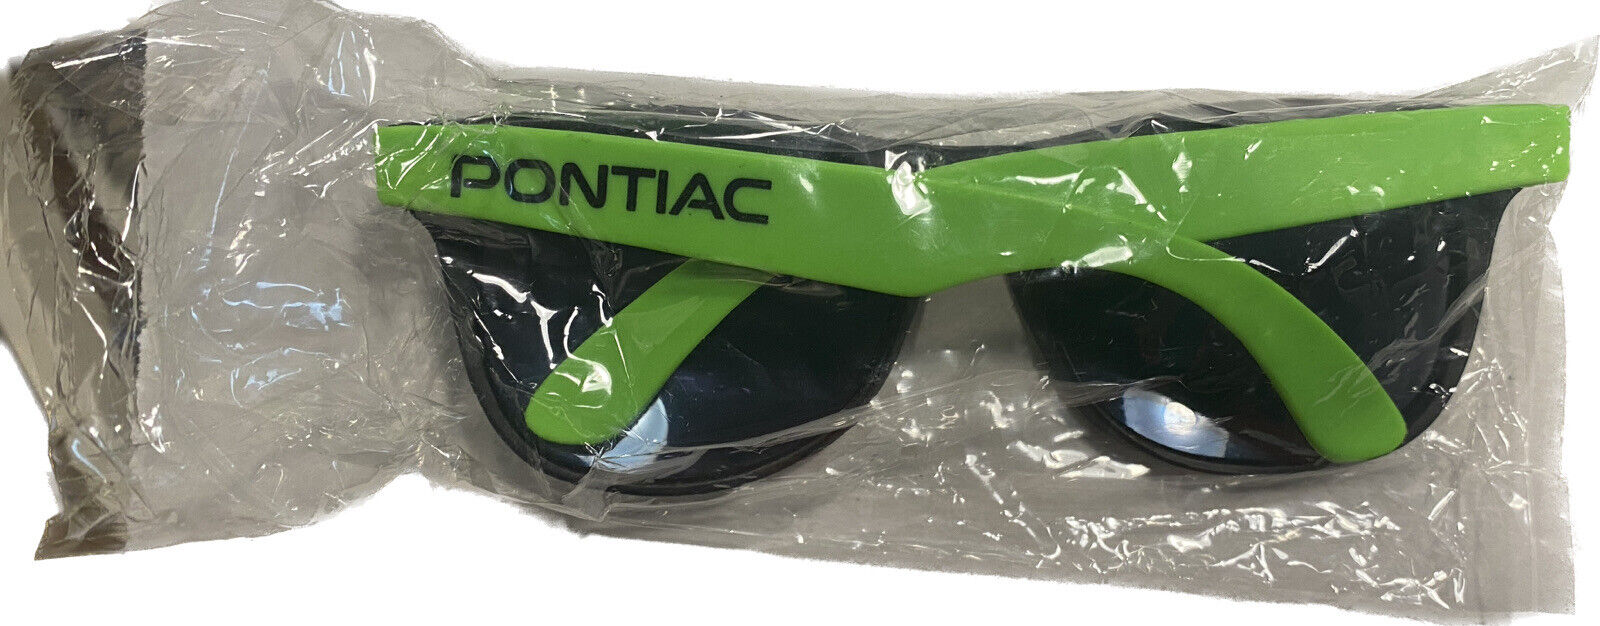 VTG Pontiac Promotional UV Sunglasses Neon Green, New Sealed, 1990’s B